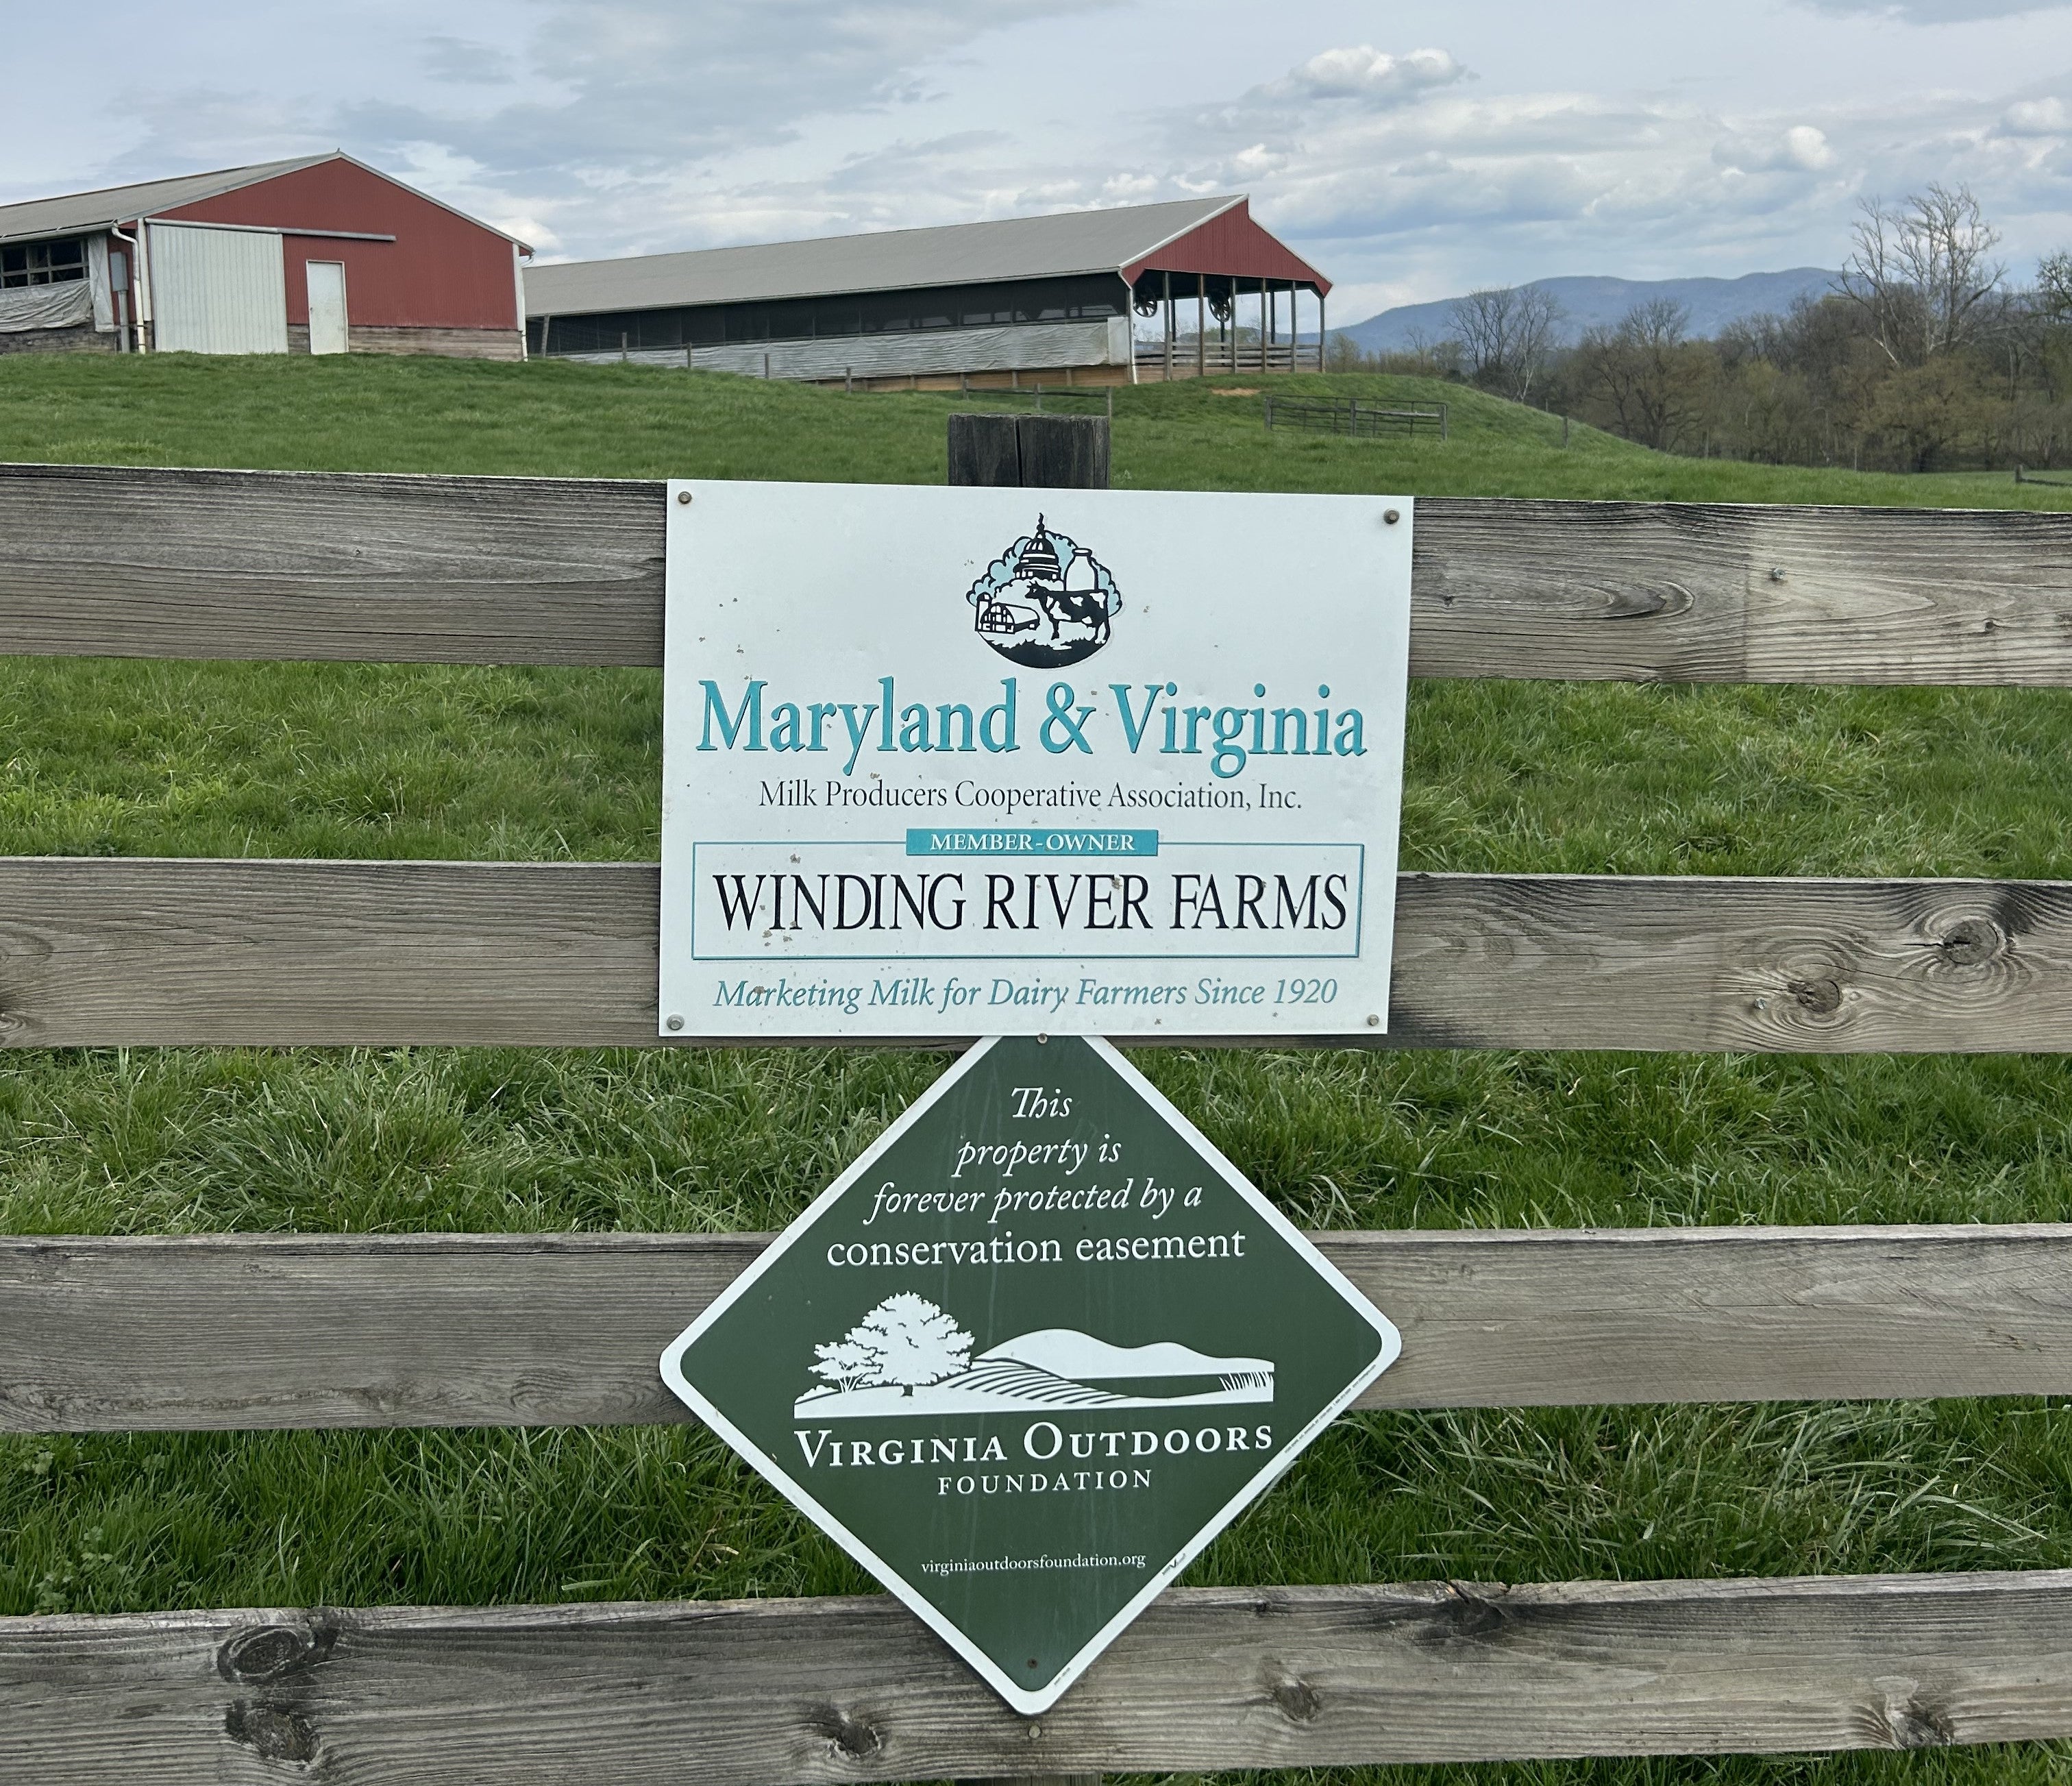 Winding River Farm conservation easement